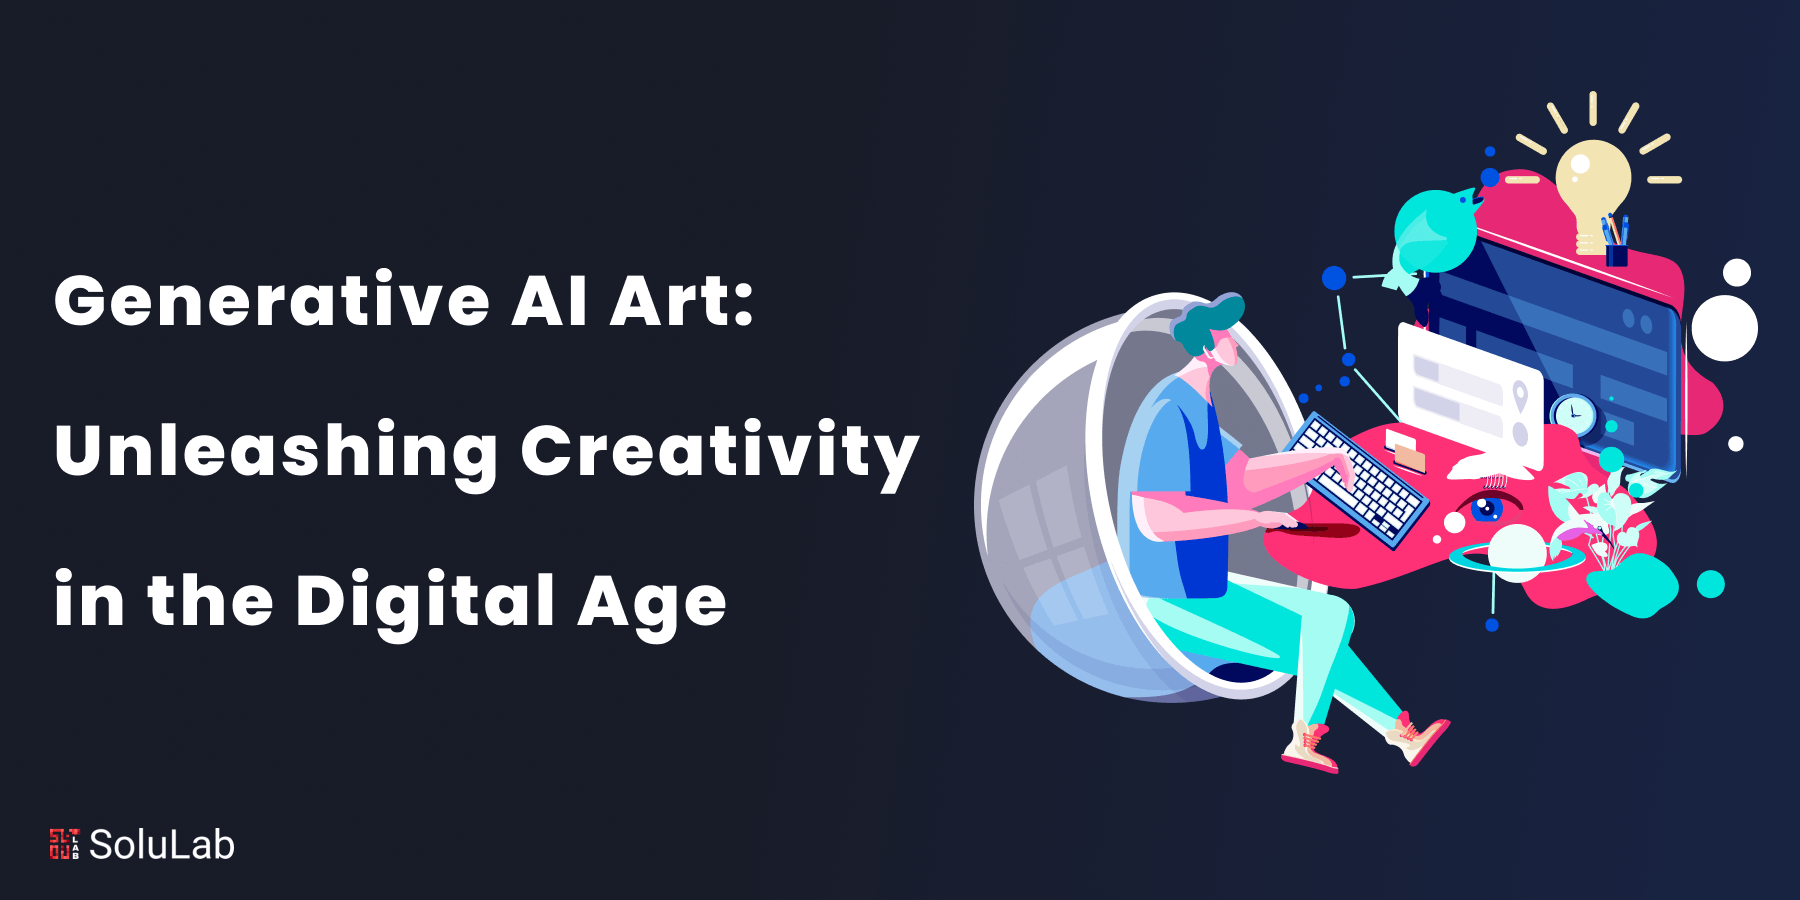 Generative AI Art: Unleashing Creativity in the Digital Age